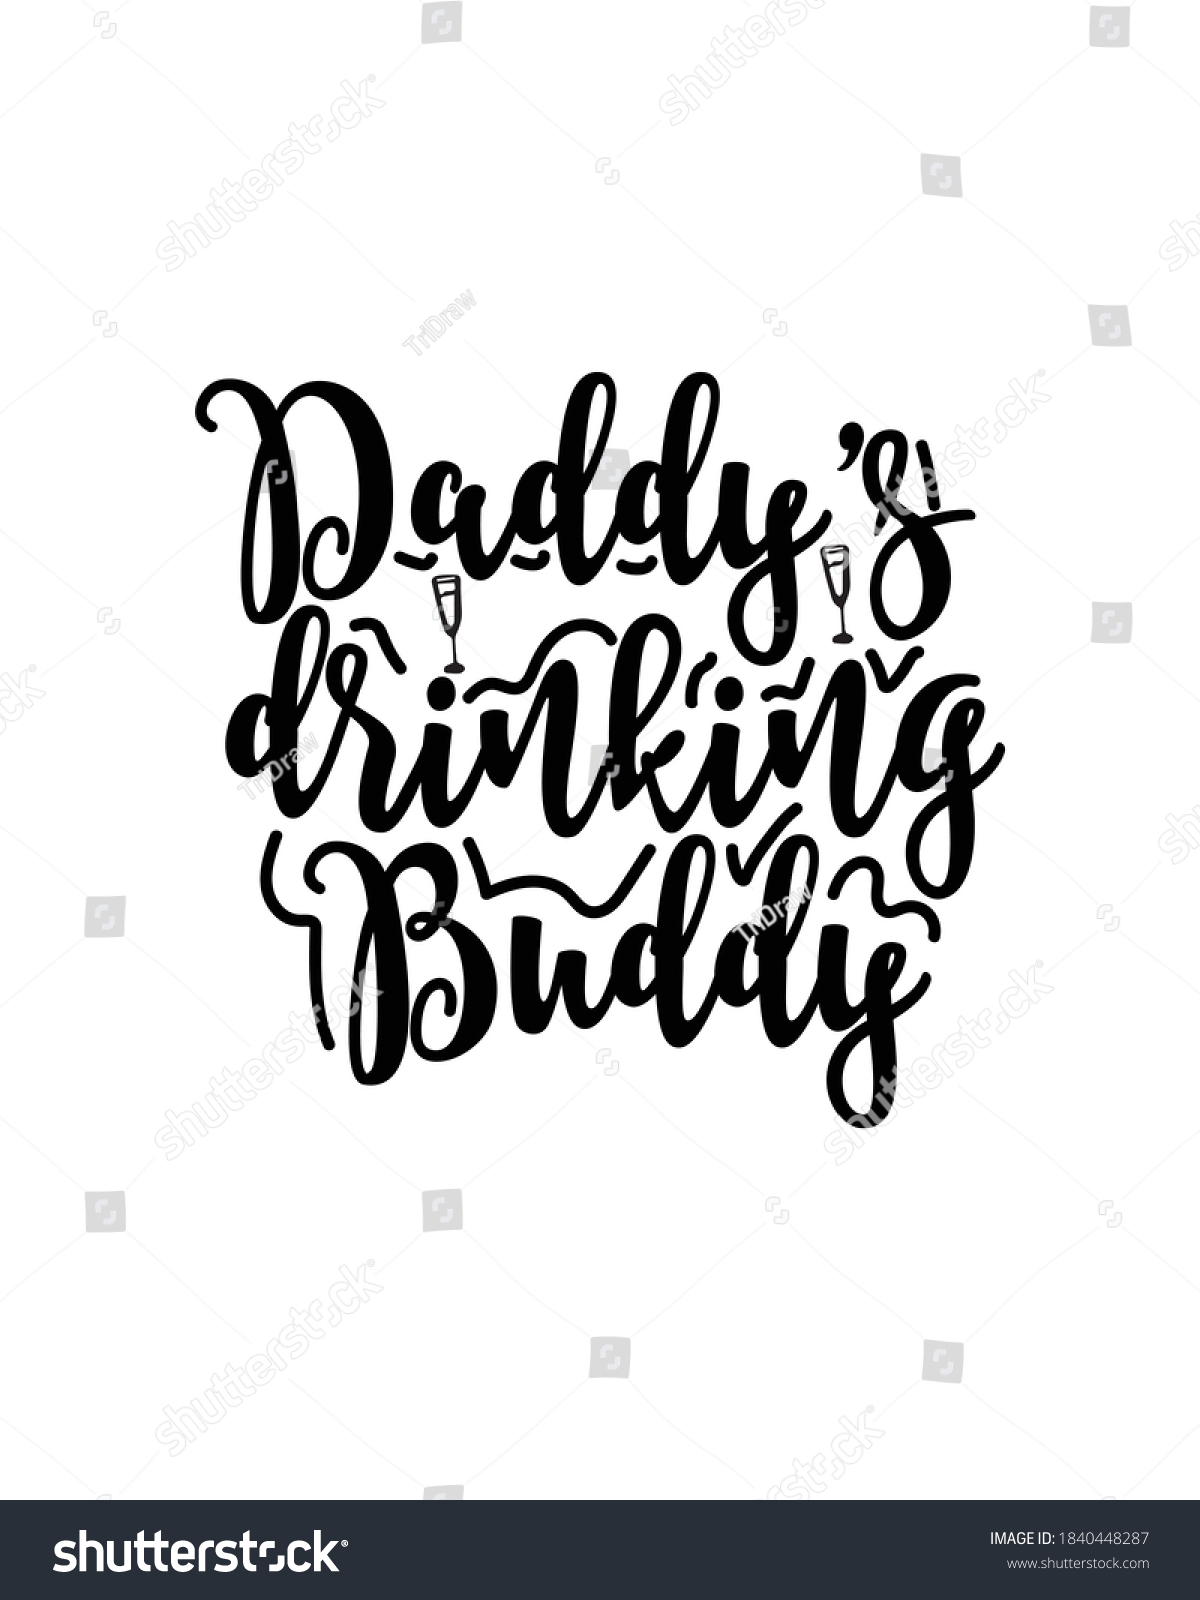 SVG of daddy's drinking buddy. Hand drawn typography poster design. Premium Vector. svg